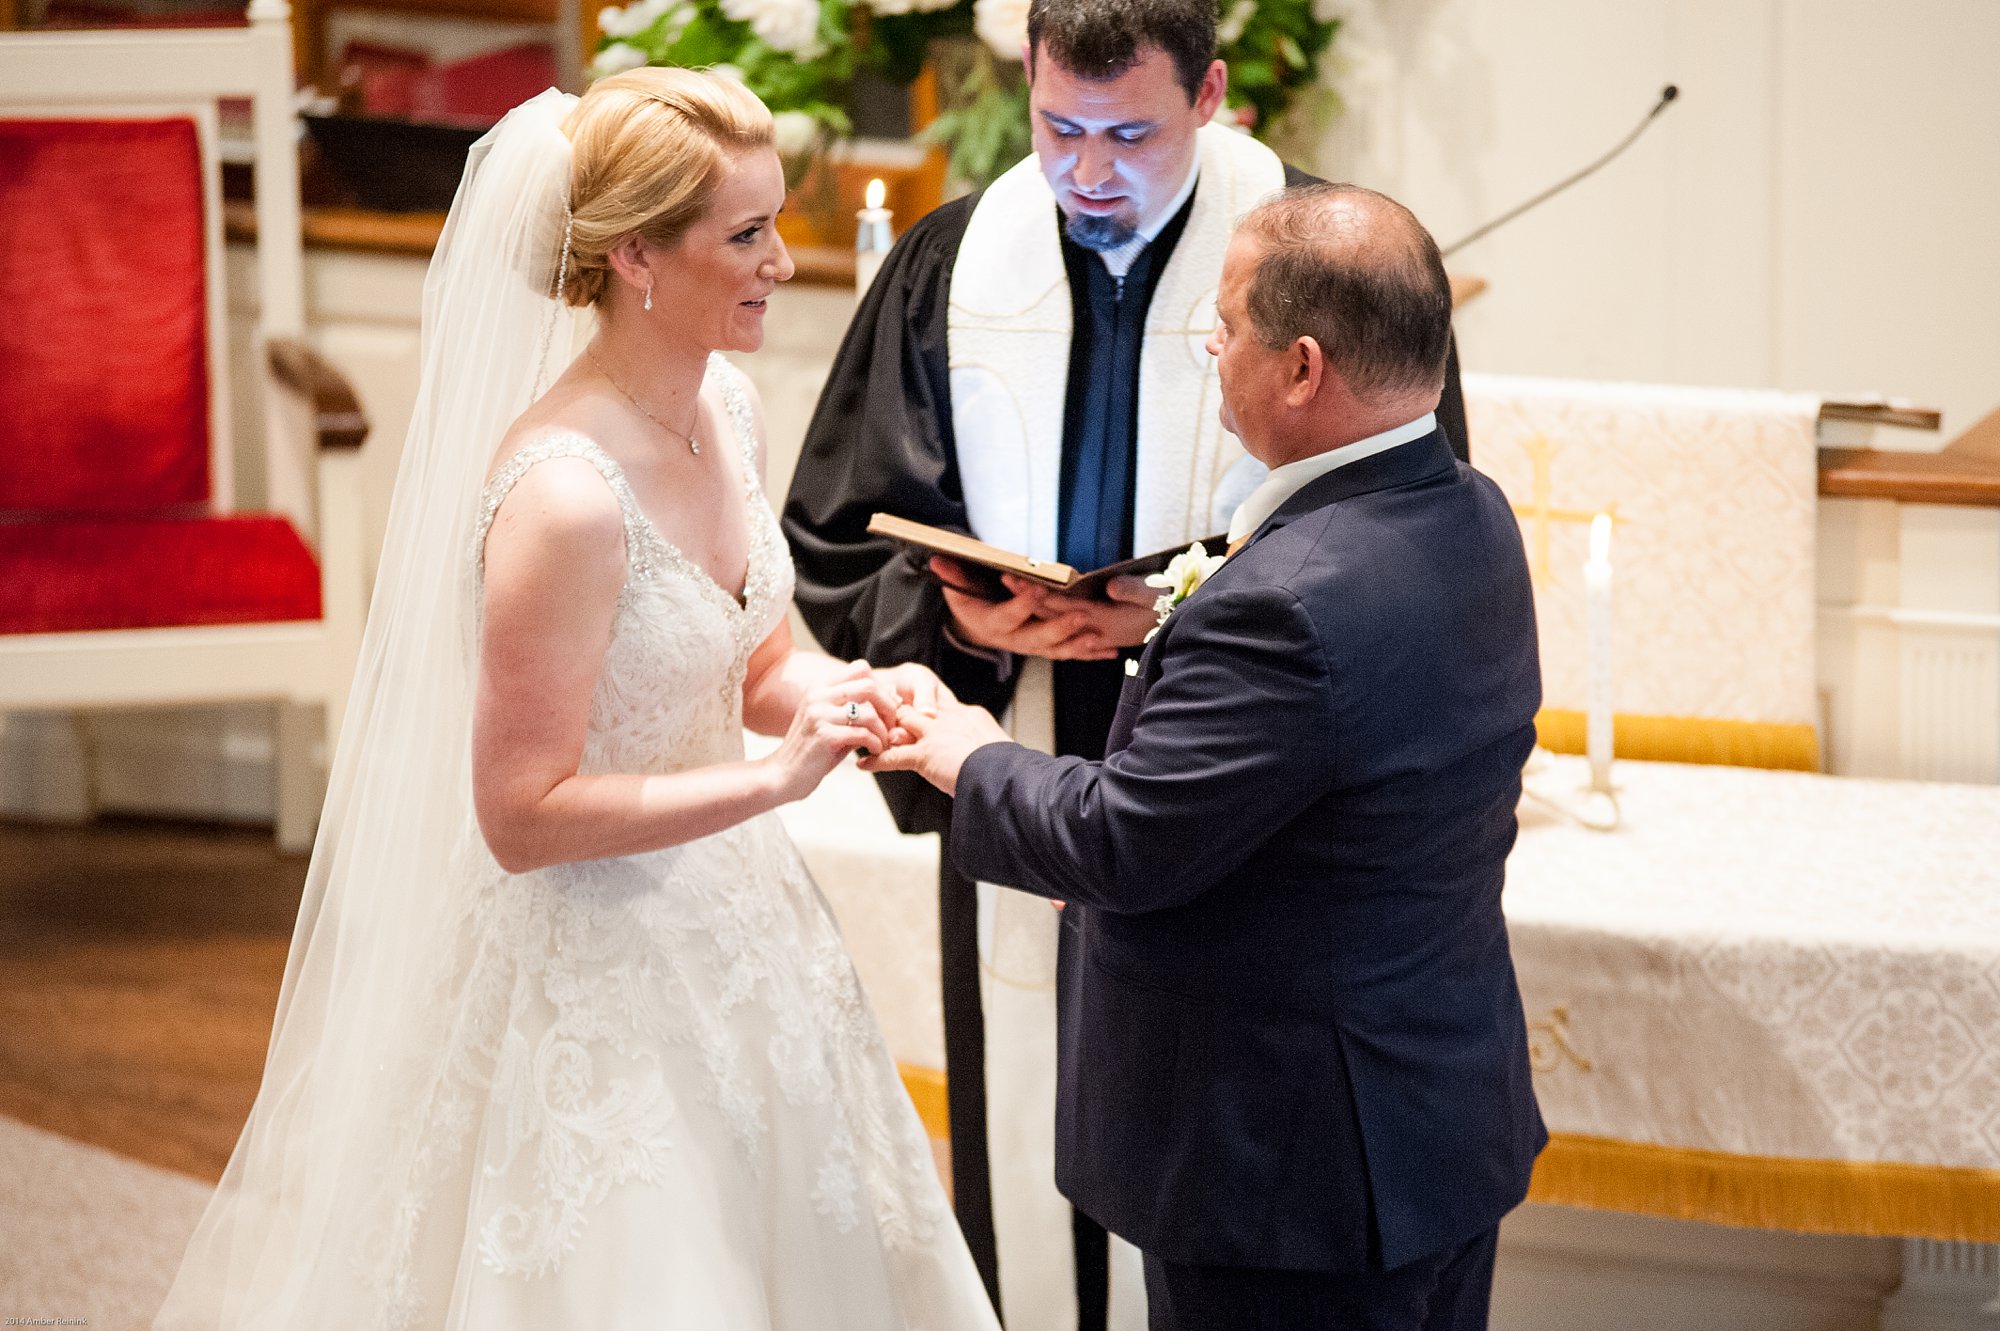 Wedding ceremony pictures at Washington Street United Methodist Church